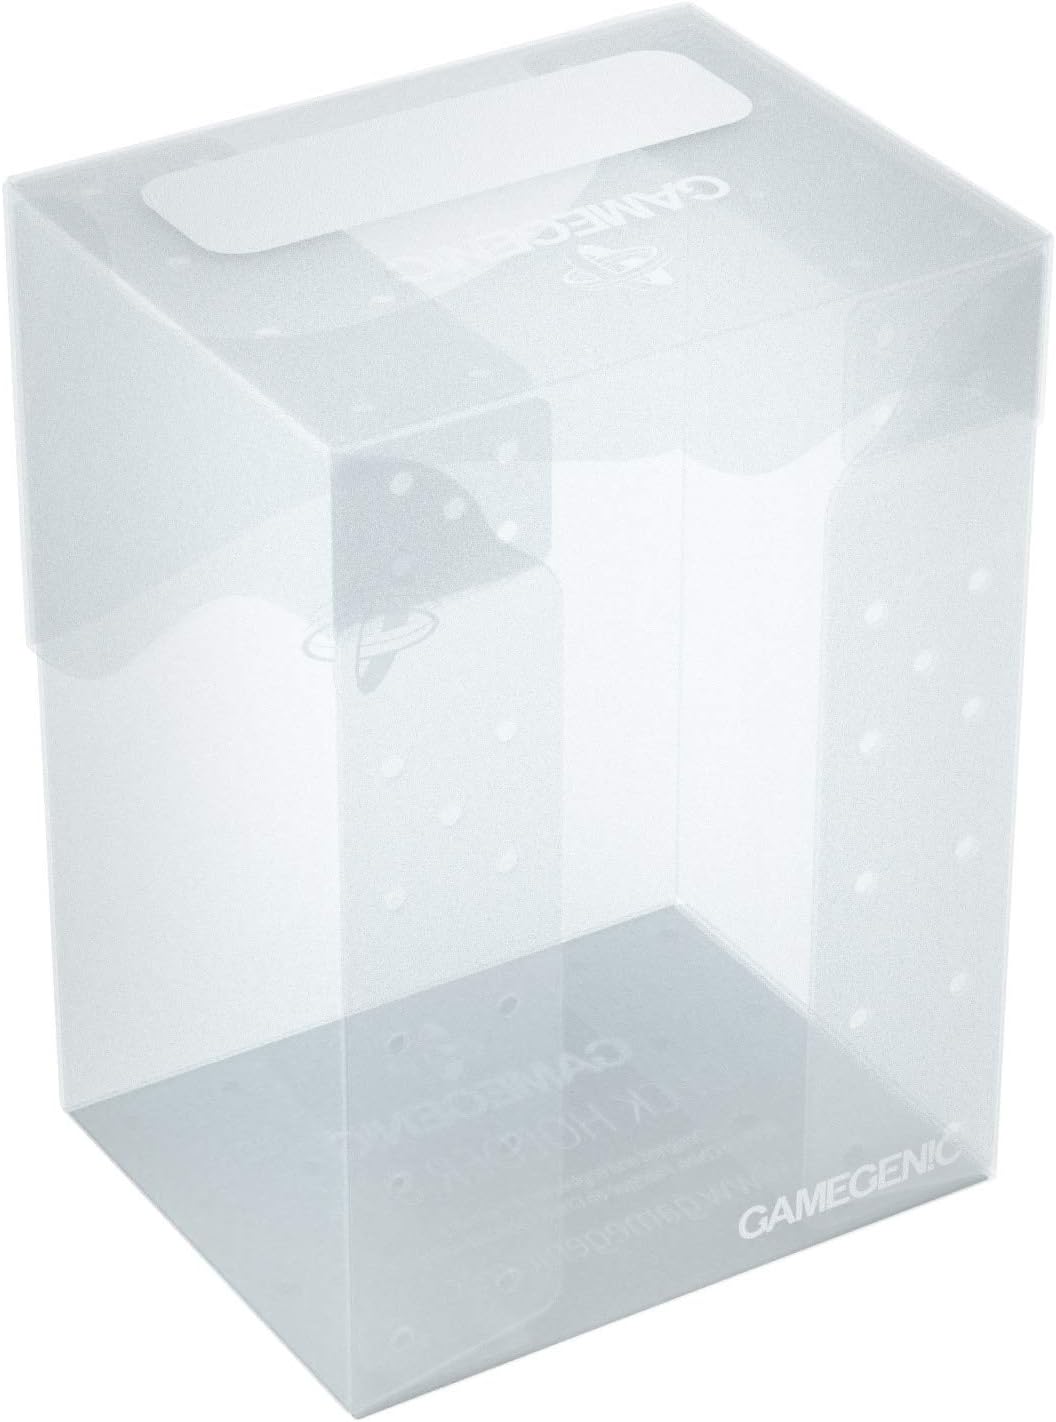 Gamegenic 80-Karten-Deck-Halter, transparent